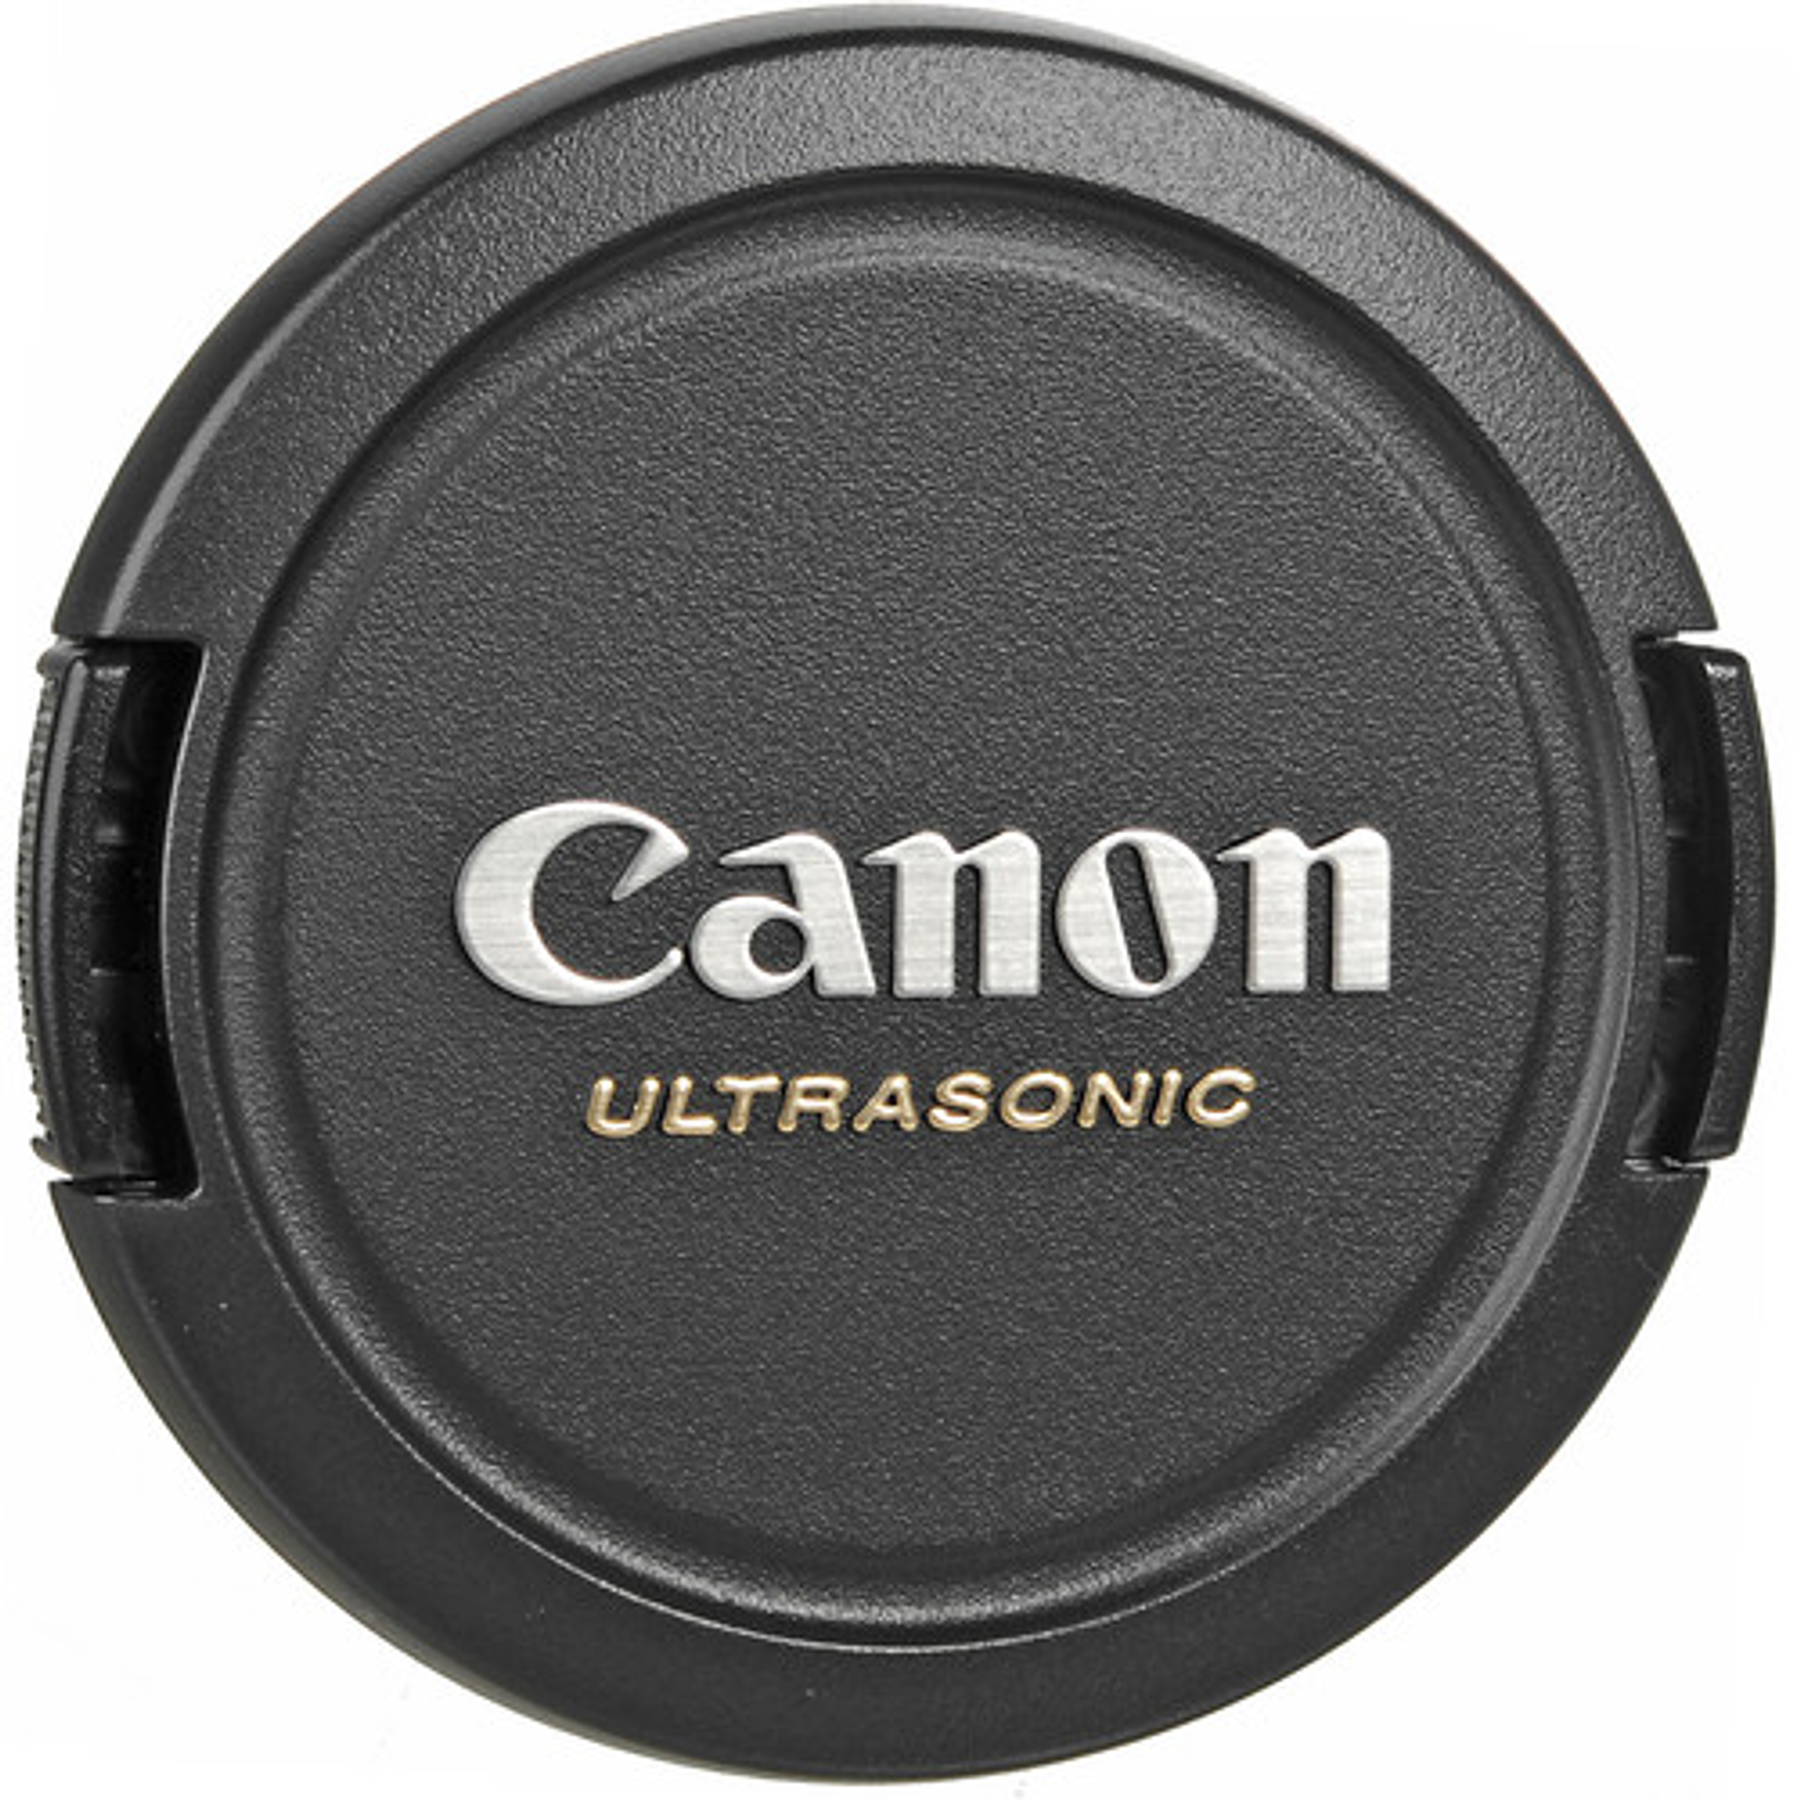 Lente Canon EF 50mm f/1.4 USM